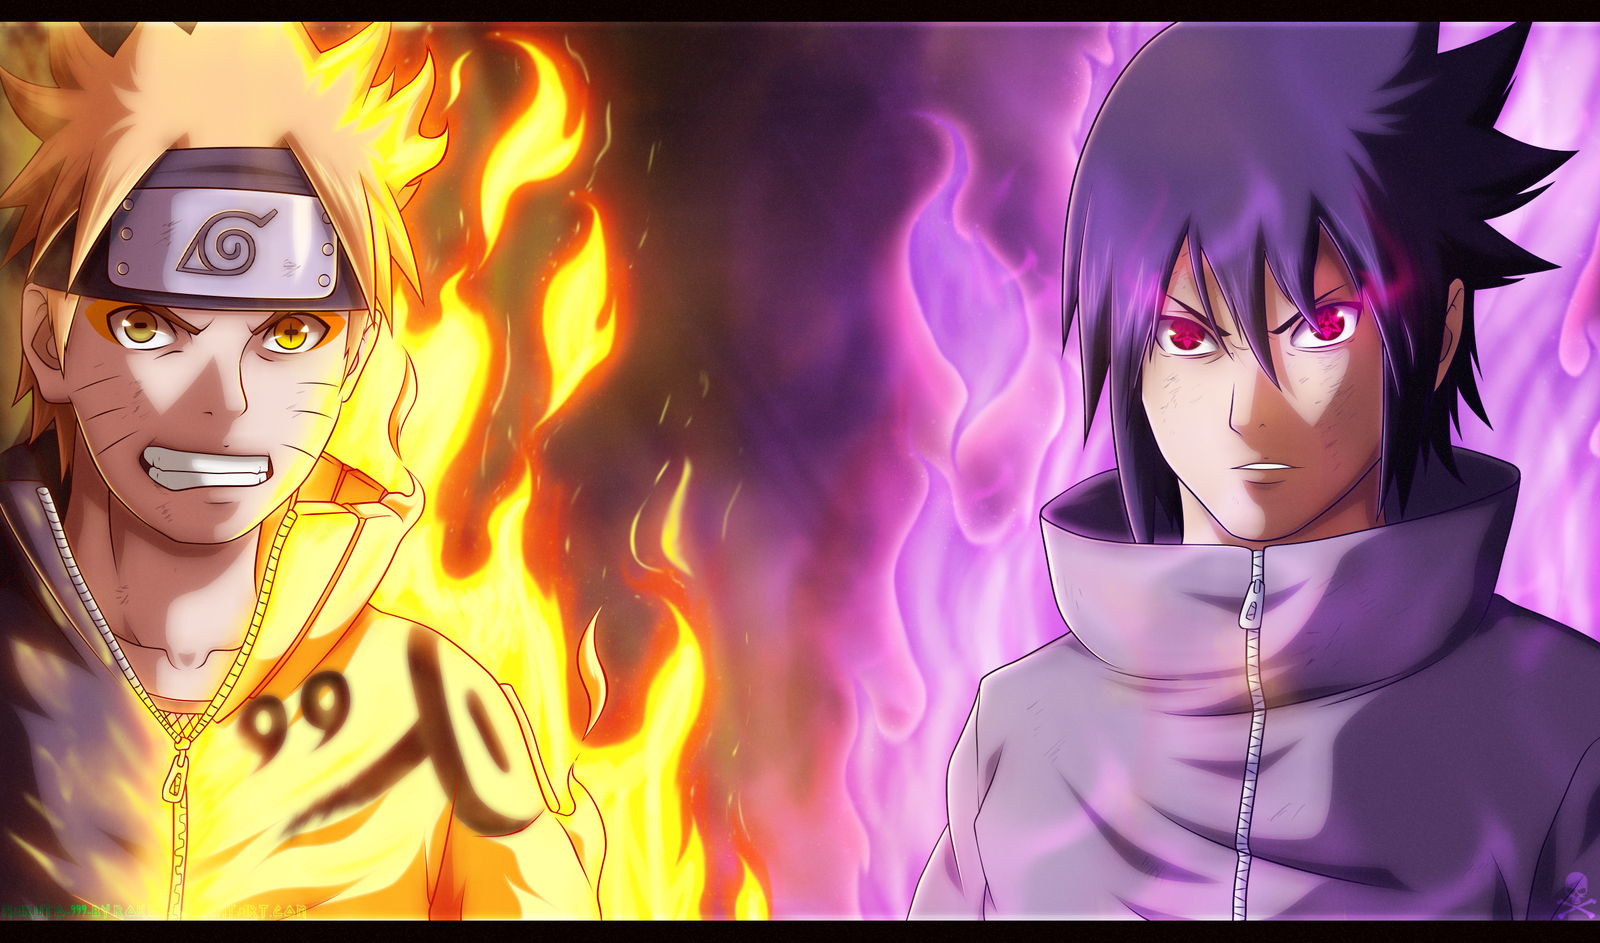 Naruto Sasuke Fight wallpaper background (1600 x 943 )